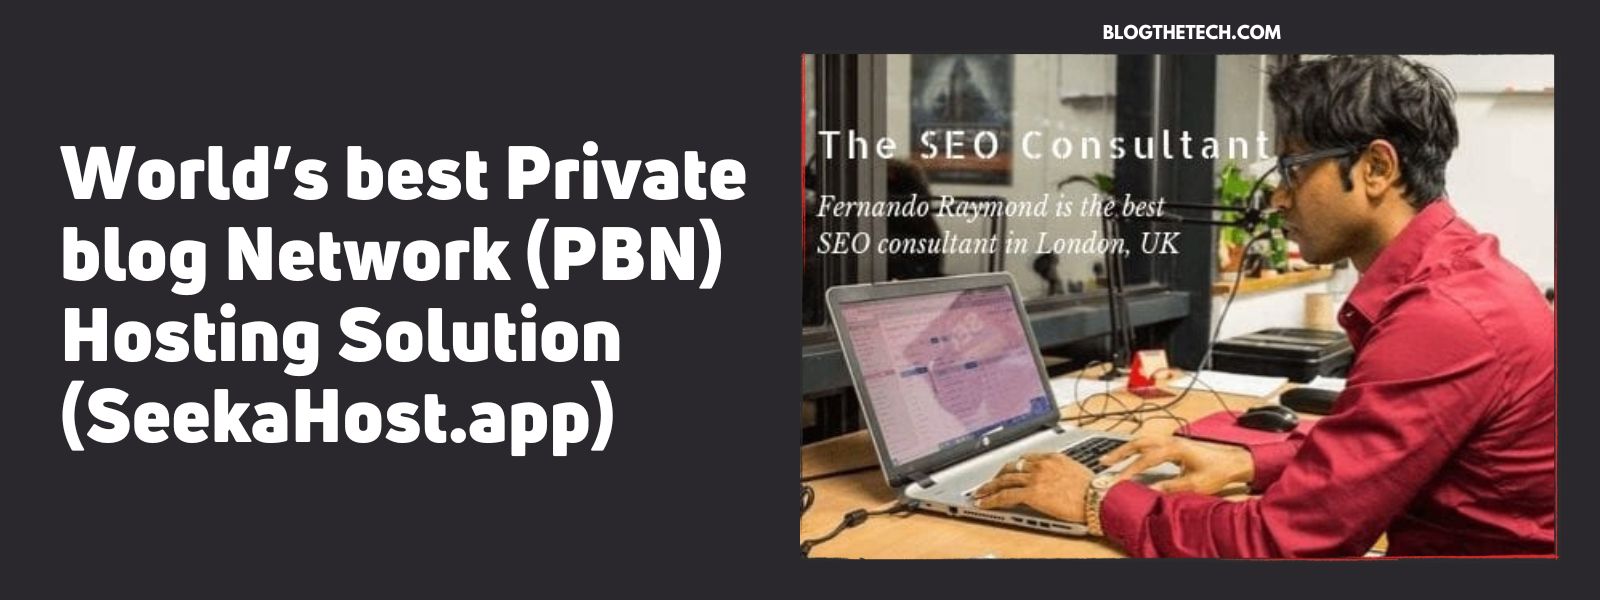 World’s best Private blog Network (PBN) Hosting Solution